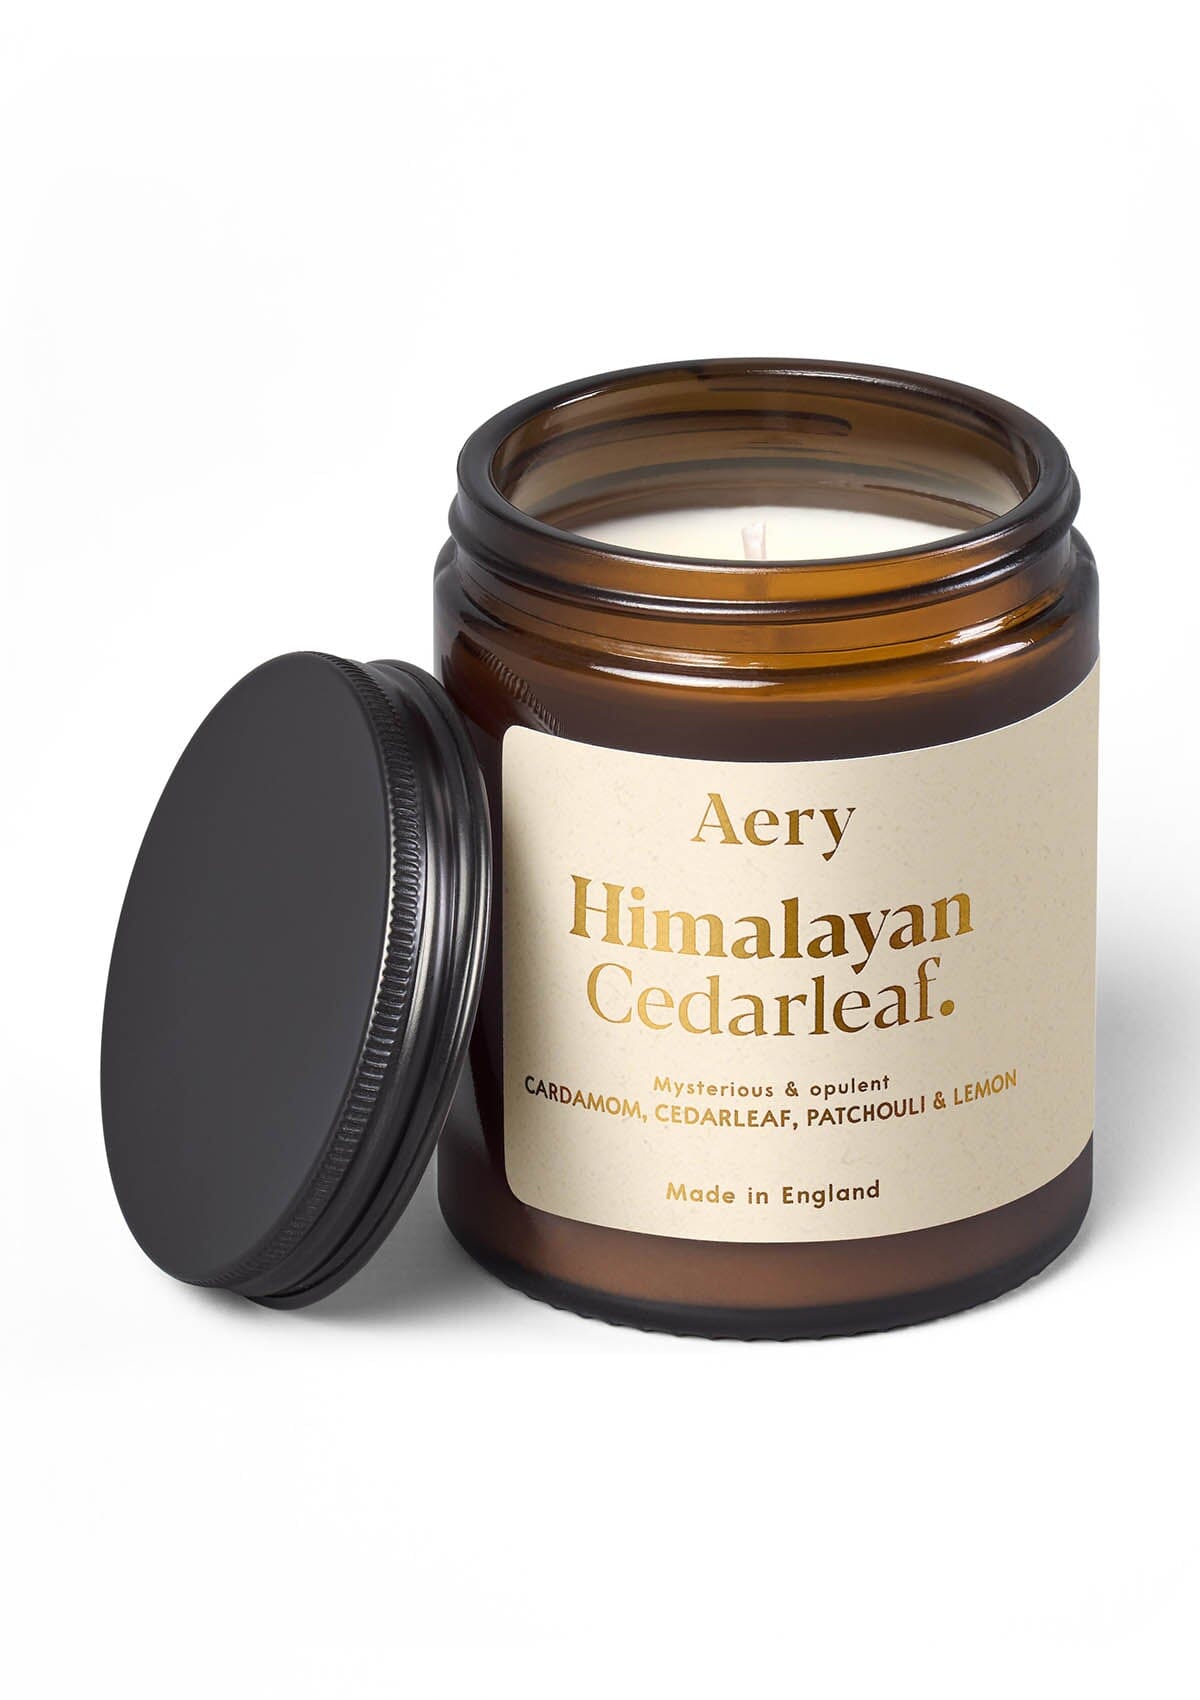 Cream Himalayan Cedarleaf jar candle by Aery displayed on white background 